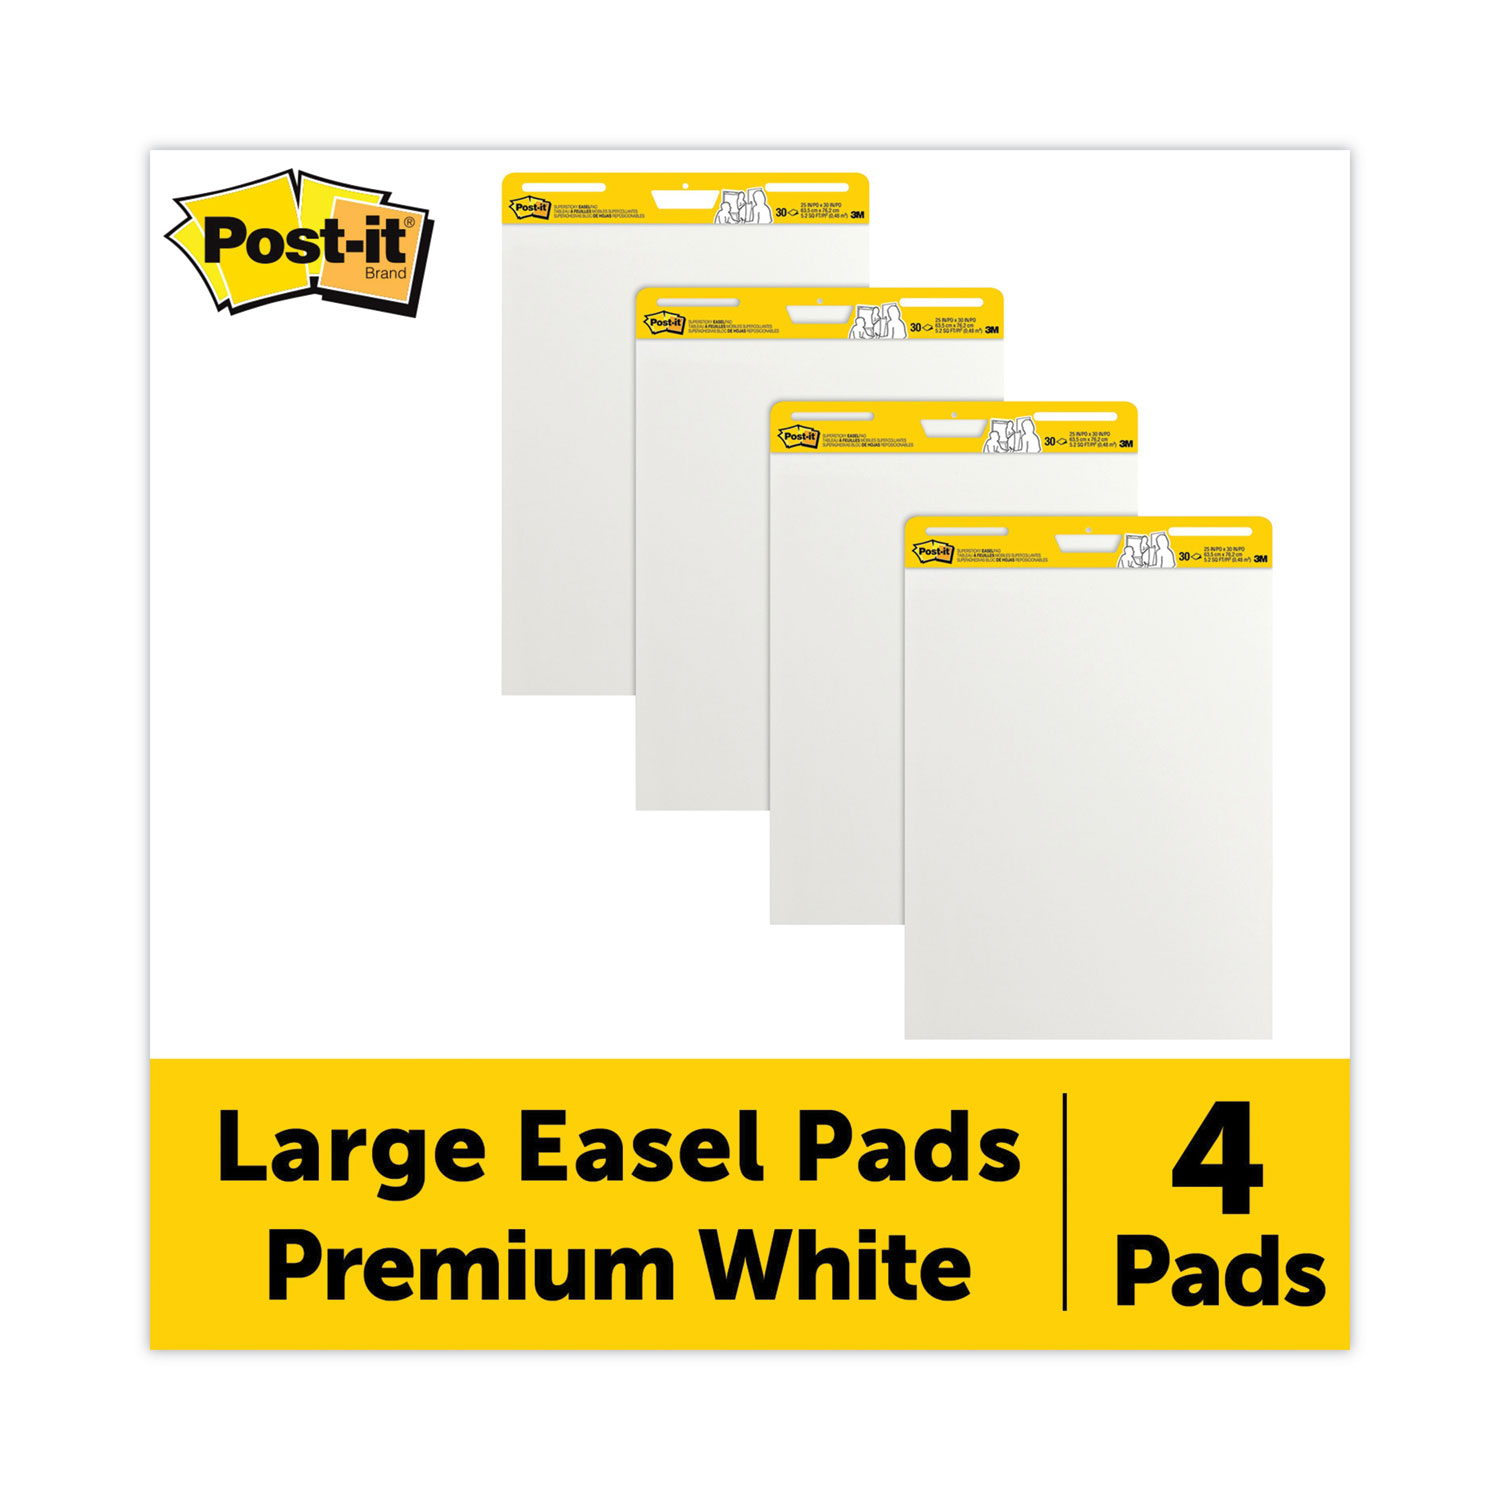 Post-it Self-Stick Easel Pad Ruled 25 x 30 Yellow 2 30-Sheet Pads MMM561